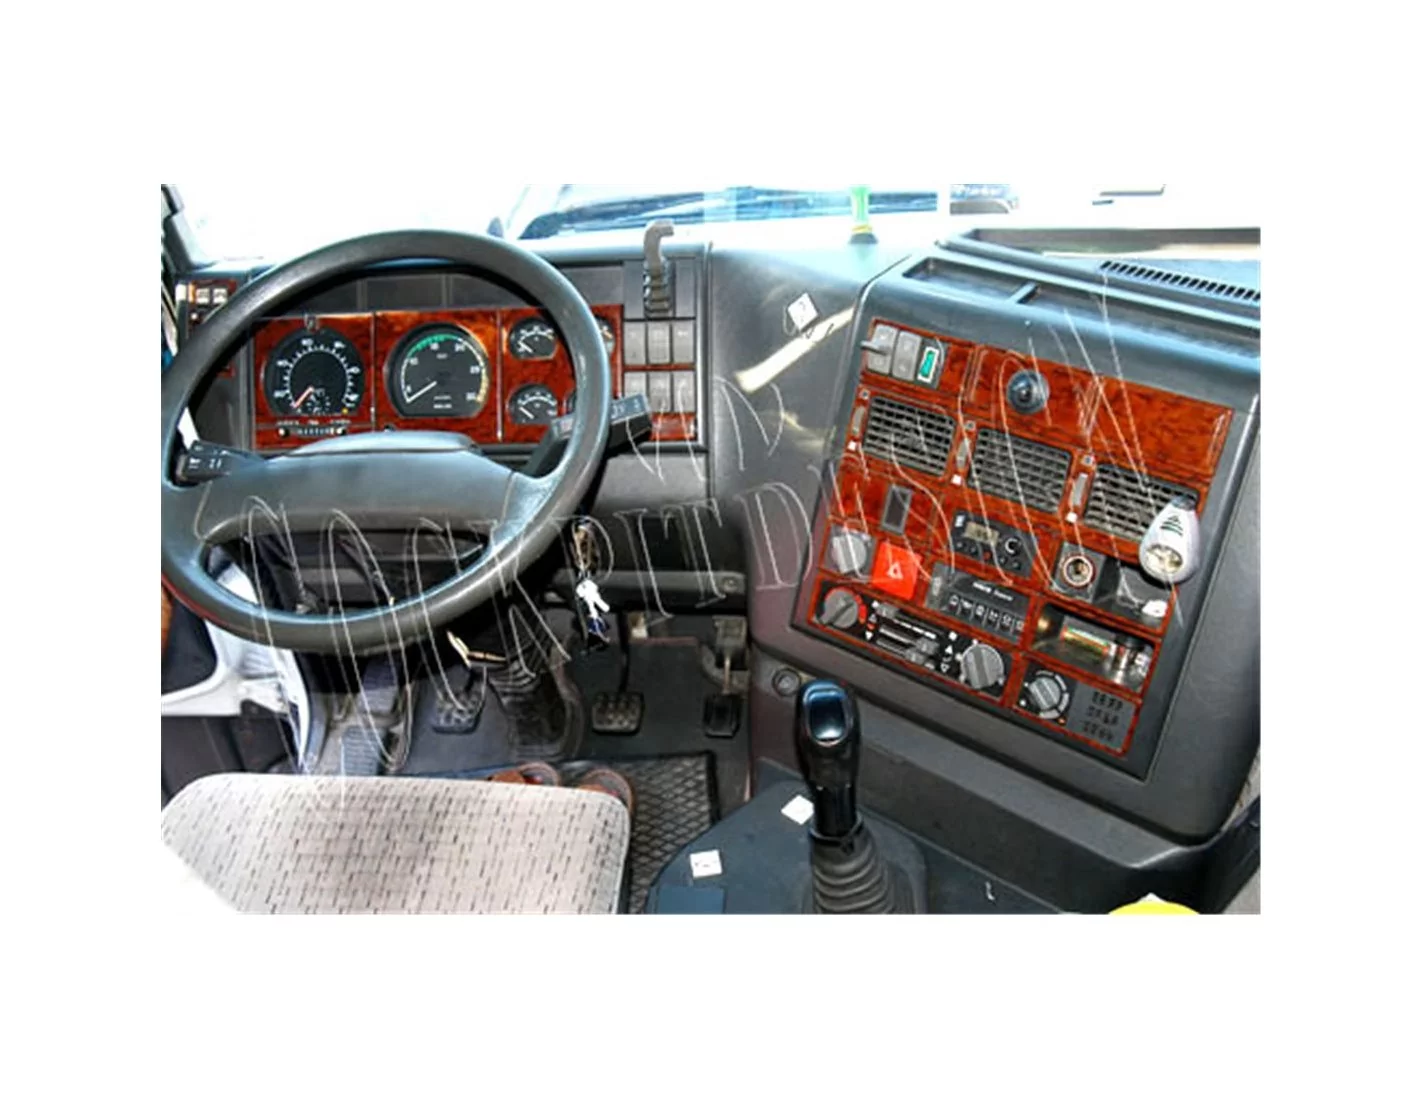 Iveco Eurotech-Eurostar 92-00 Mittelkonsole Armaturendekor Cockpit Dekor 39-Teilige - 1- Cockpit Dekor Innenraum